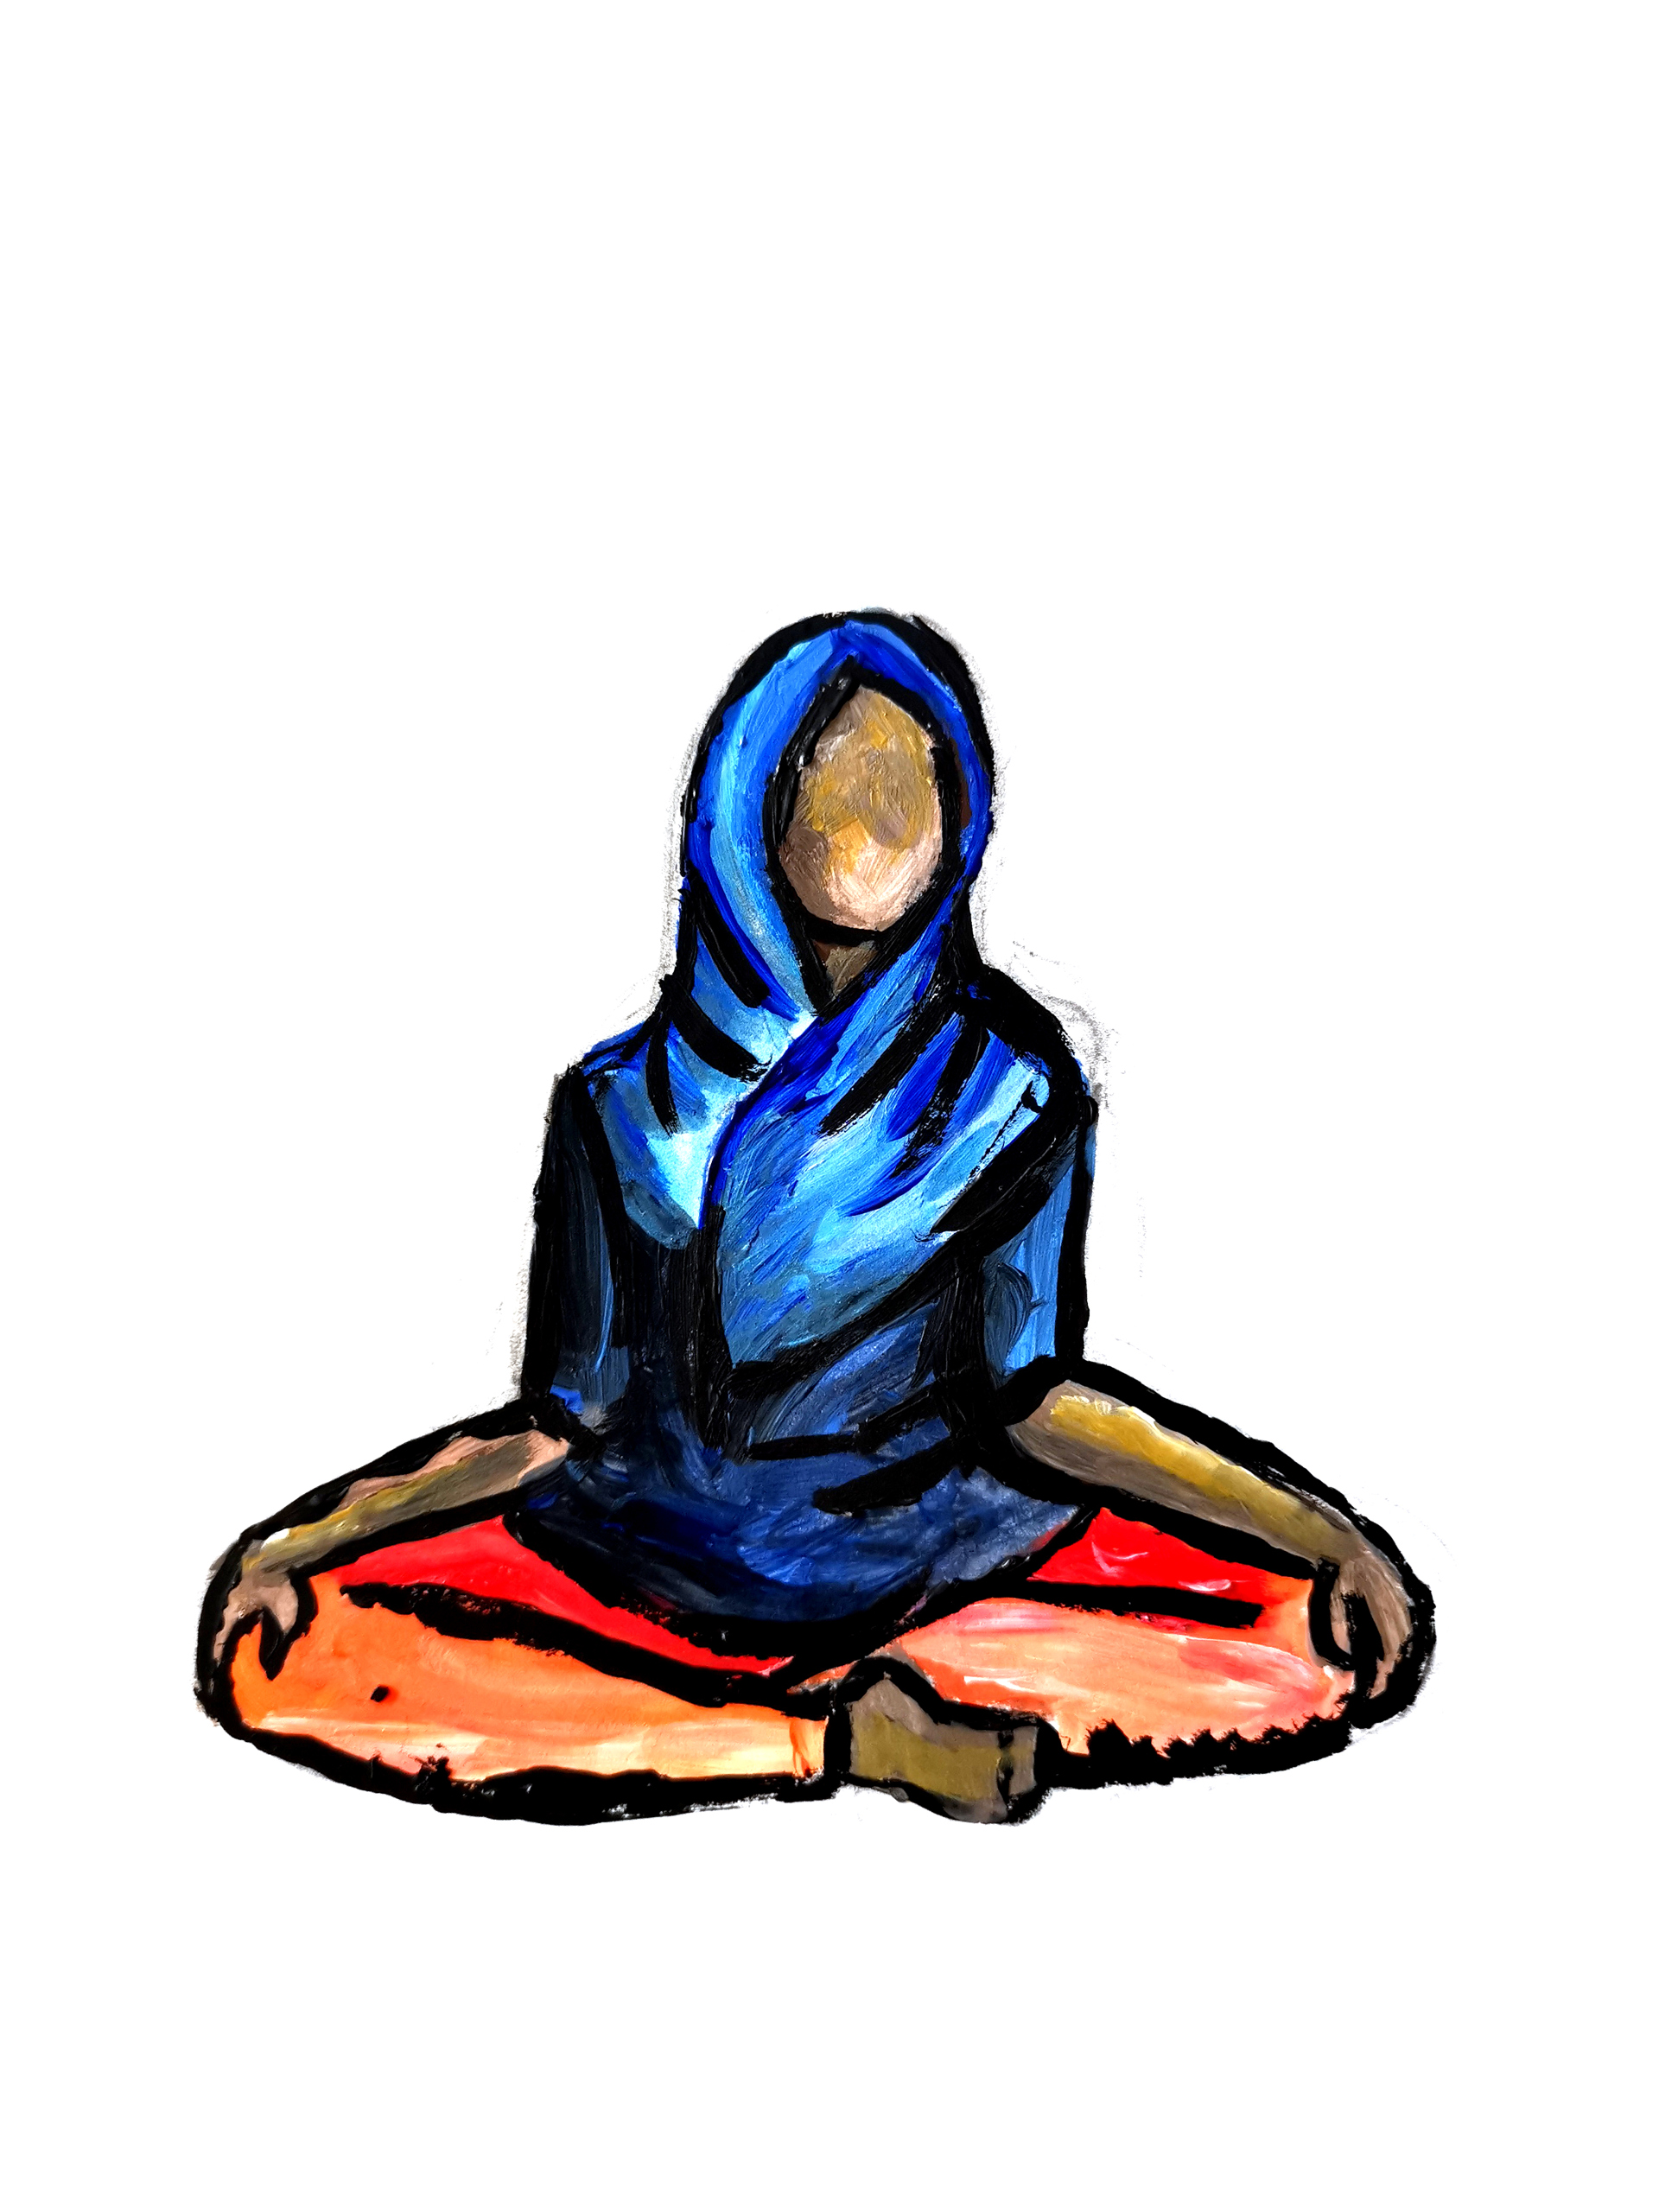 Painting of young female global majority dancer wearing headscarf sitting cross legged